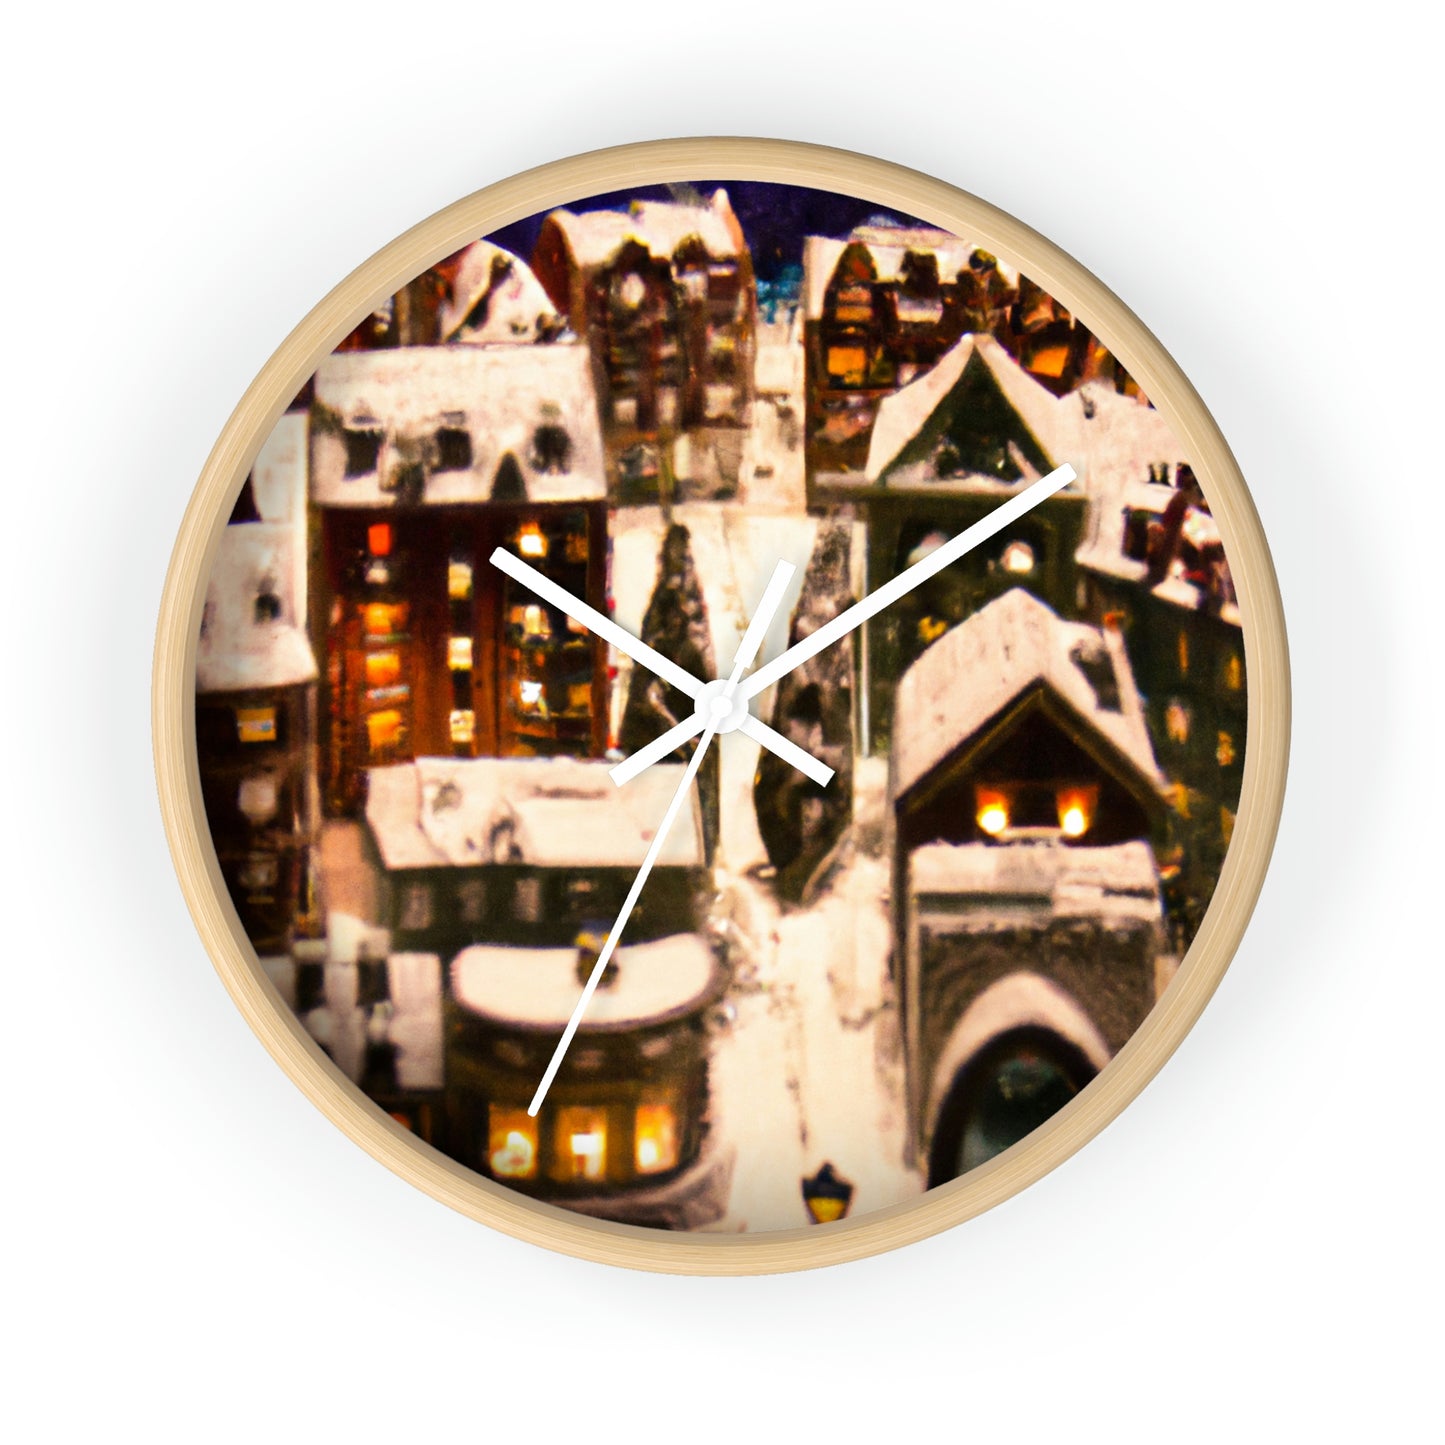 "Winter Wonderland City" - The Alien Wall Clock